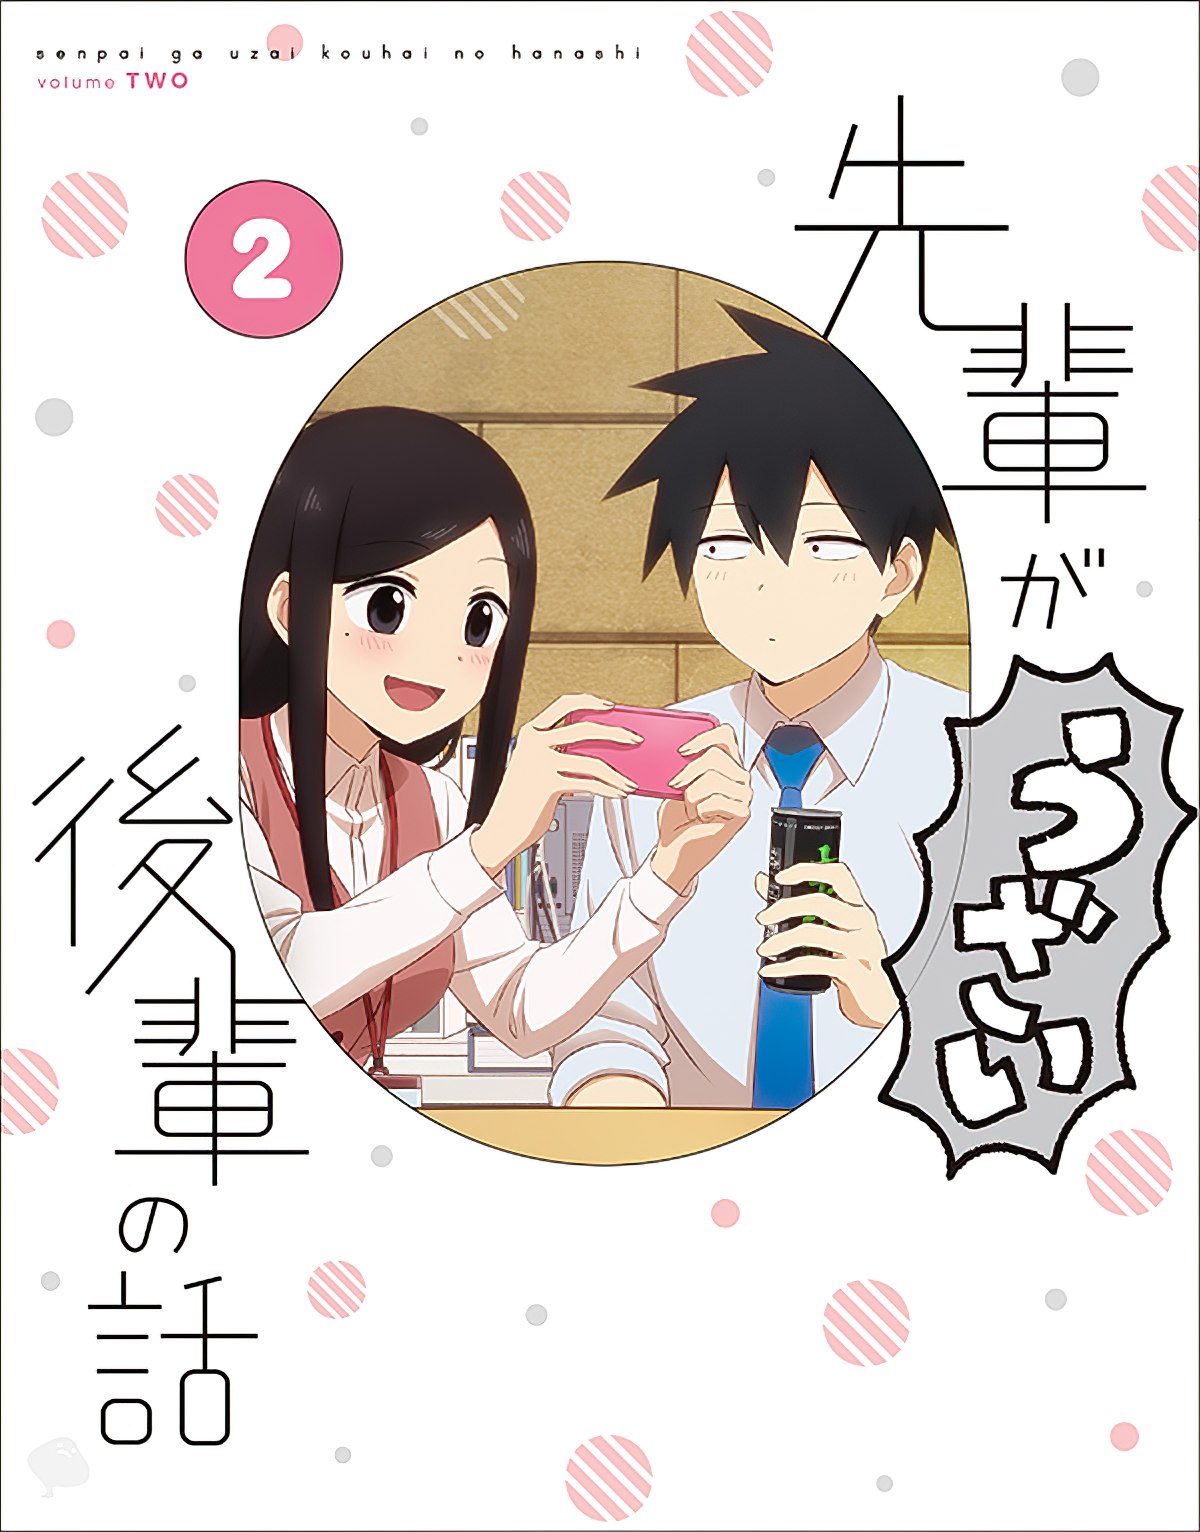 ▷ Touko and Souta star in Senpai ga Uzai Kouhai no Hanashi's second Blu-ray  〜 Anime Sweet 💕